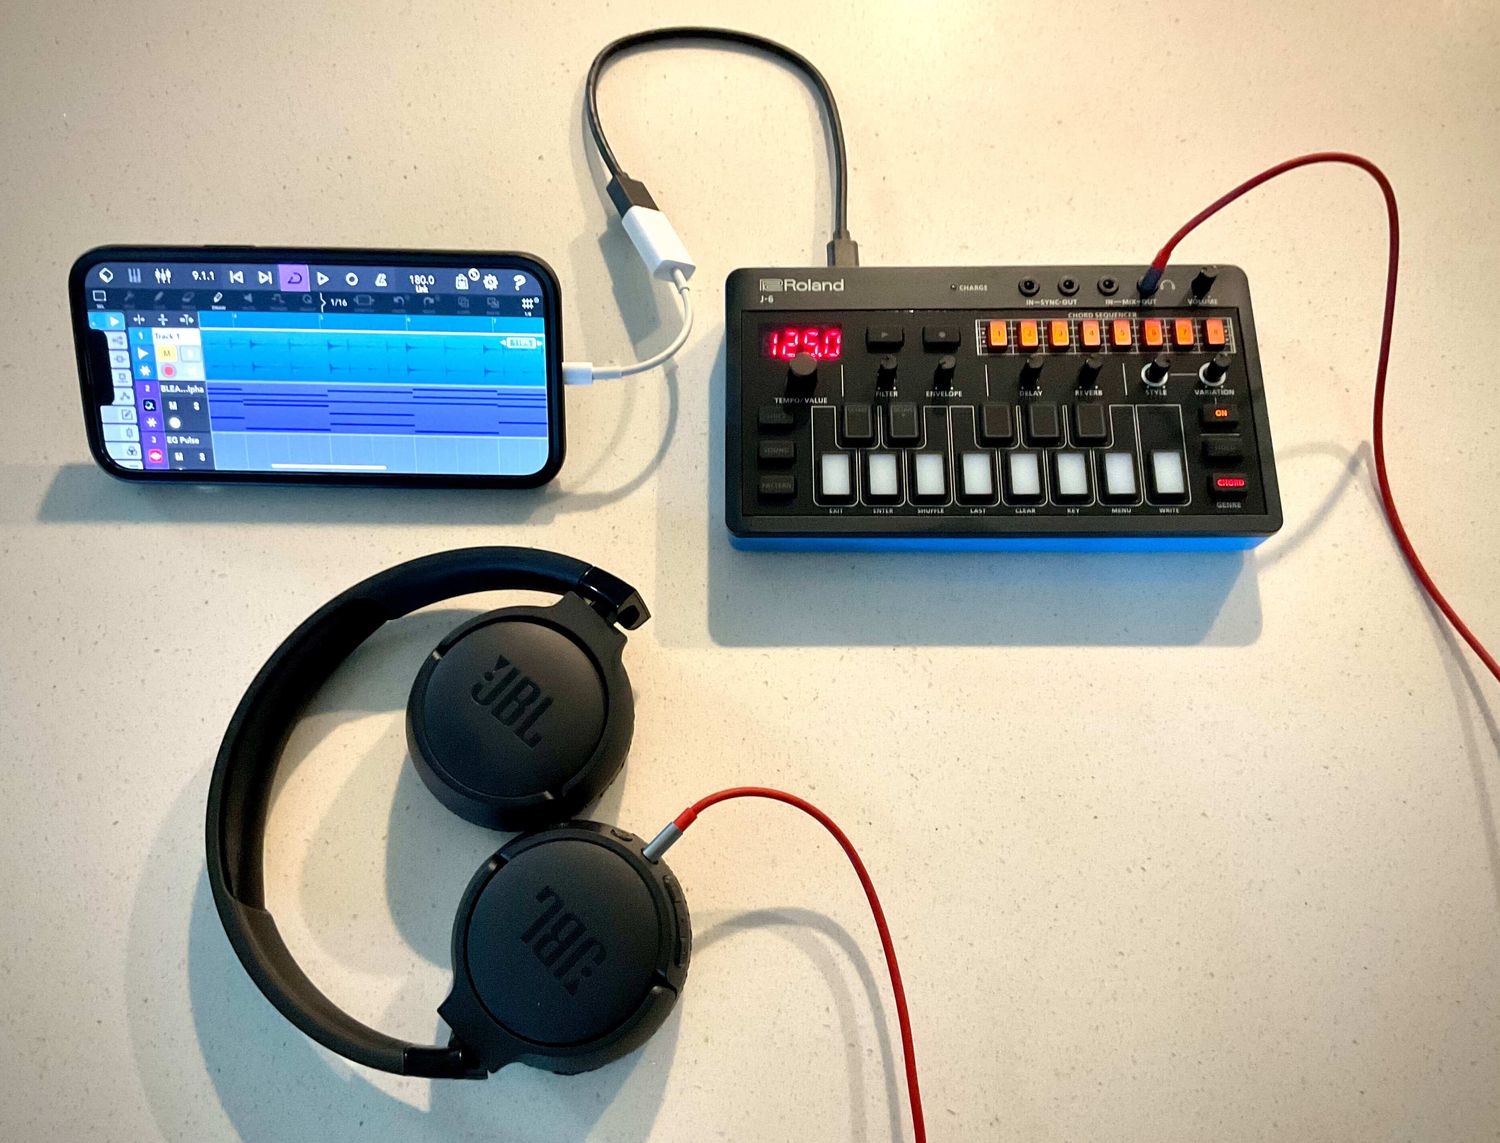 Where Is Audio MIDI Setup On IPhone